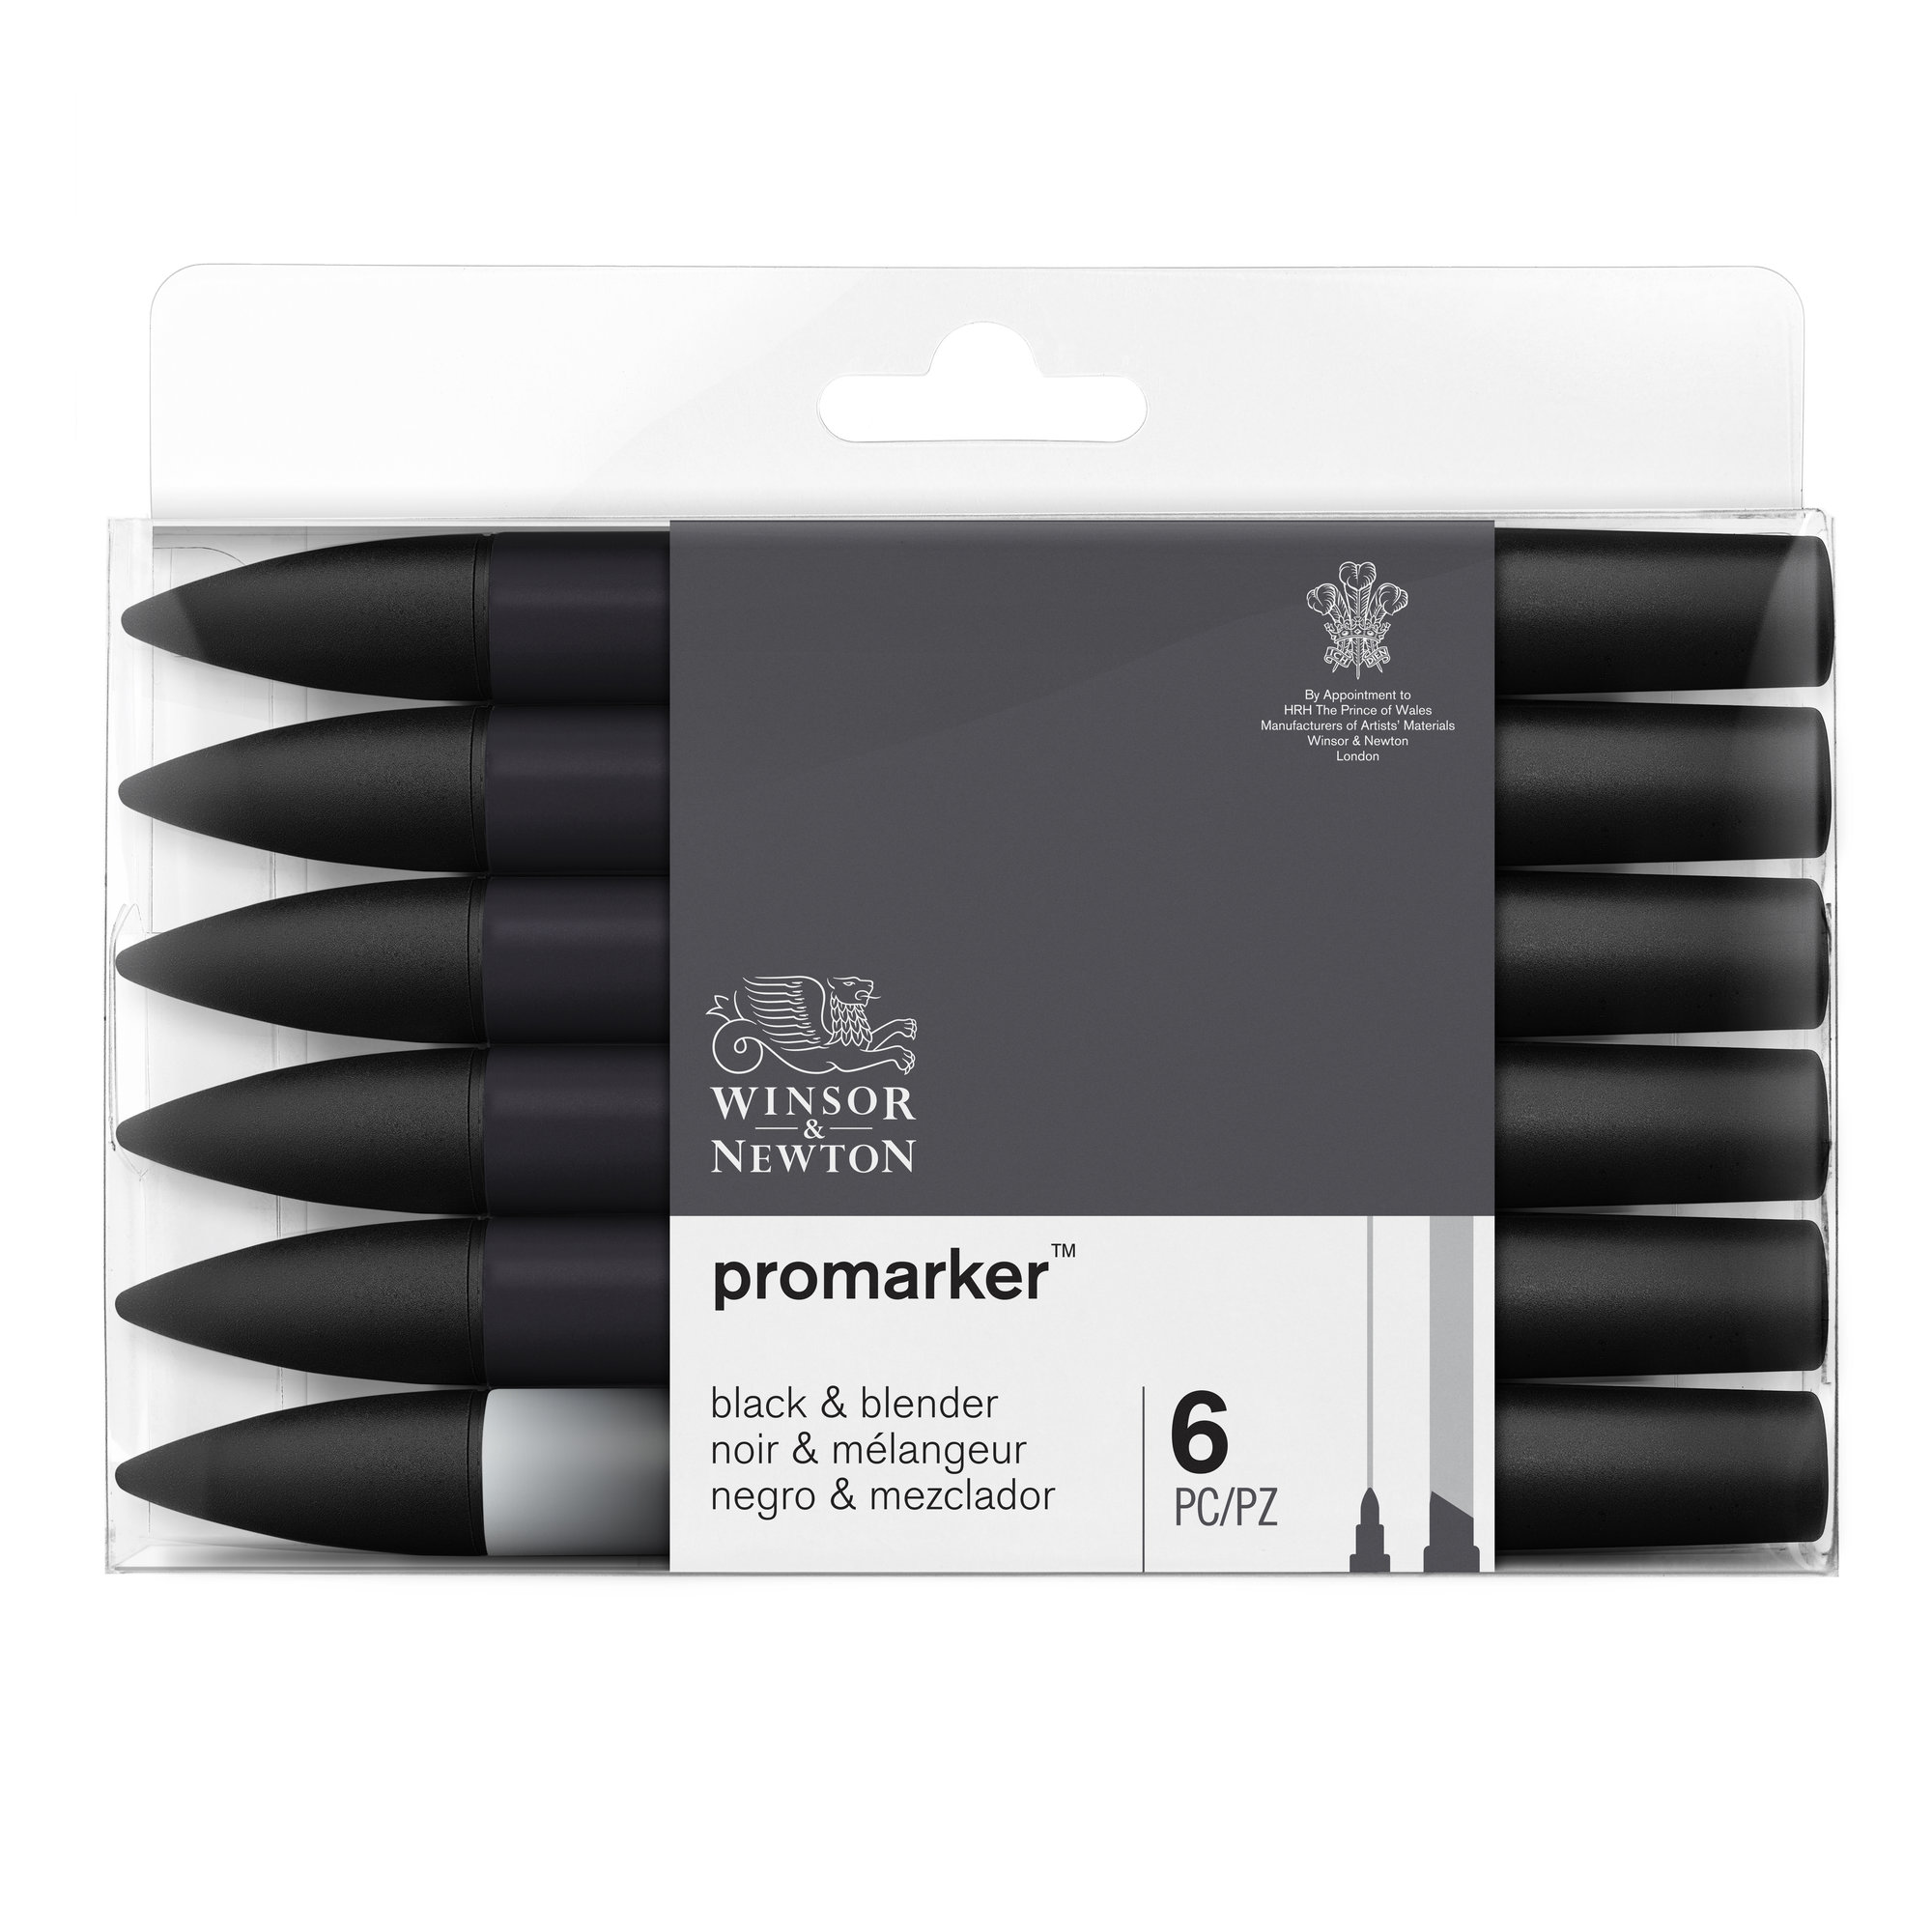 Winsor & Newton Promarker Graphic Drawing Pens Set of 6 (5 Black Pens + Blender)